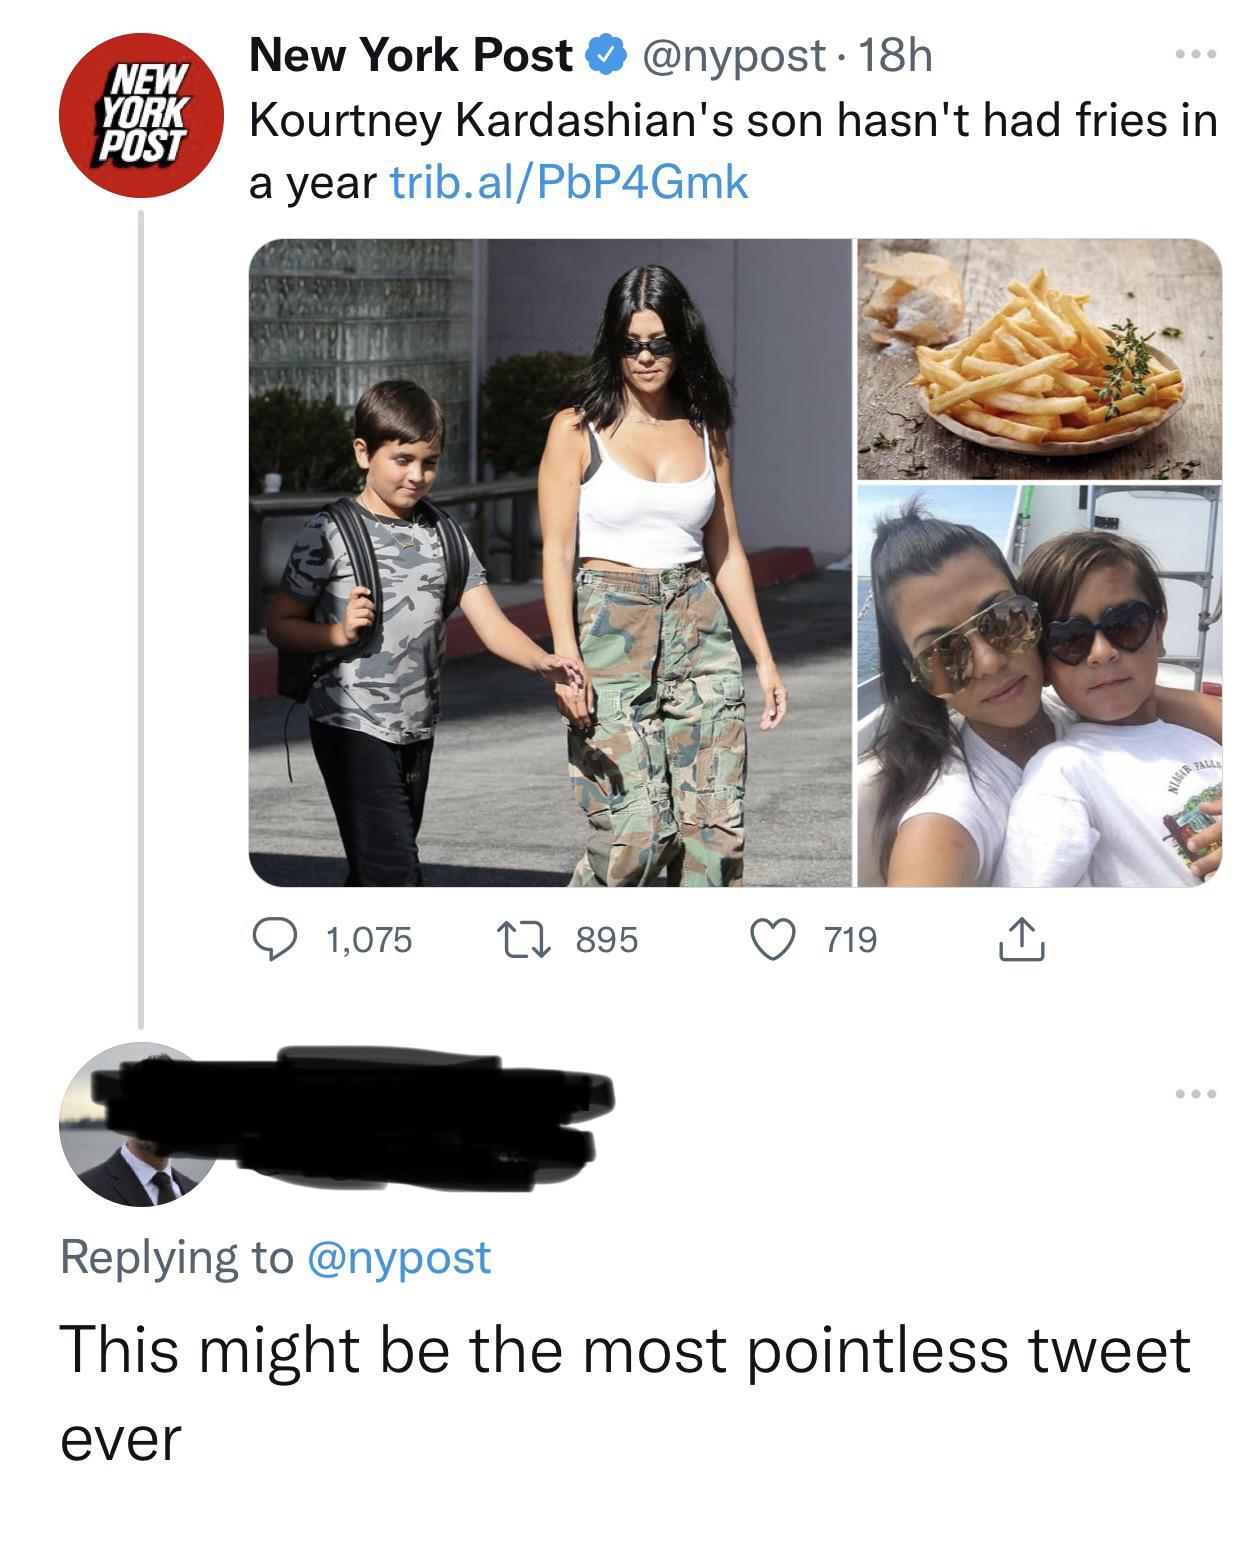 reddit facepalm - kim kardashian son has not eaten fries - New York Post New York Post . 18h Kourtney Kardashian's son hasn't had fries in a year trib.alPbP4Gmk 1,075 1895 719 This might be the most pointless tweet ever